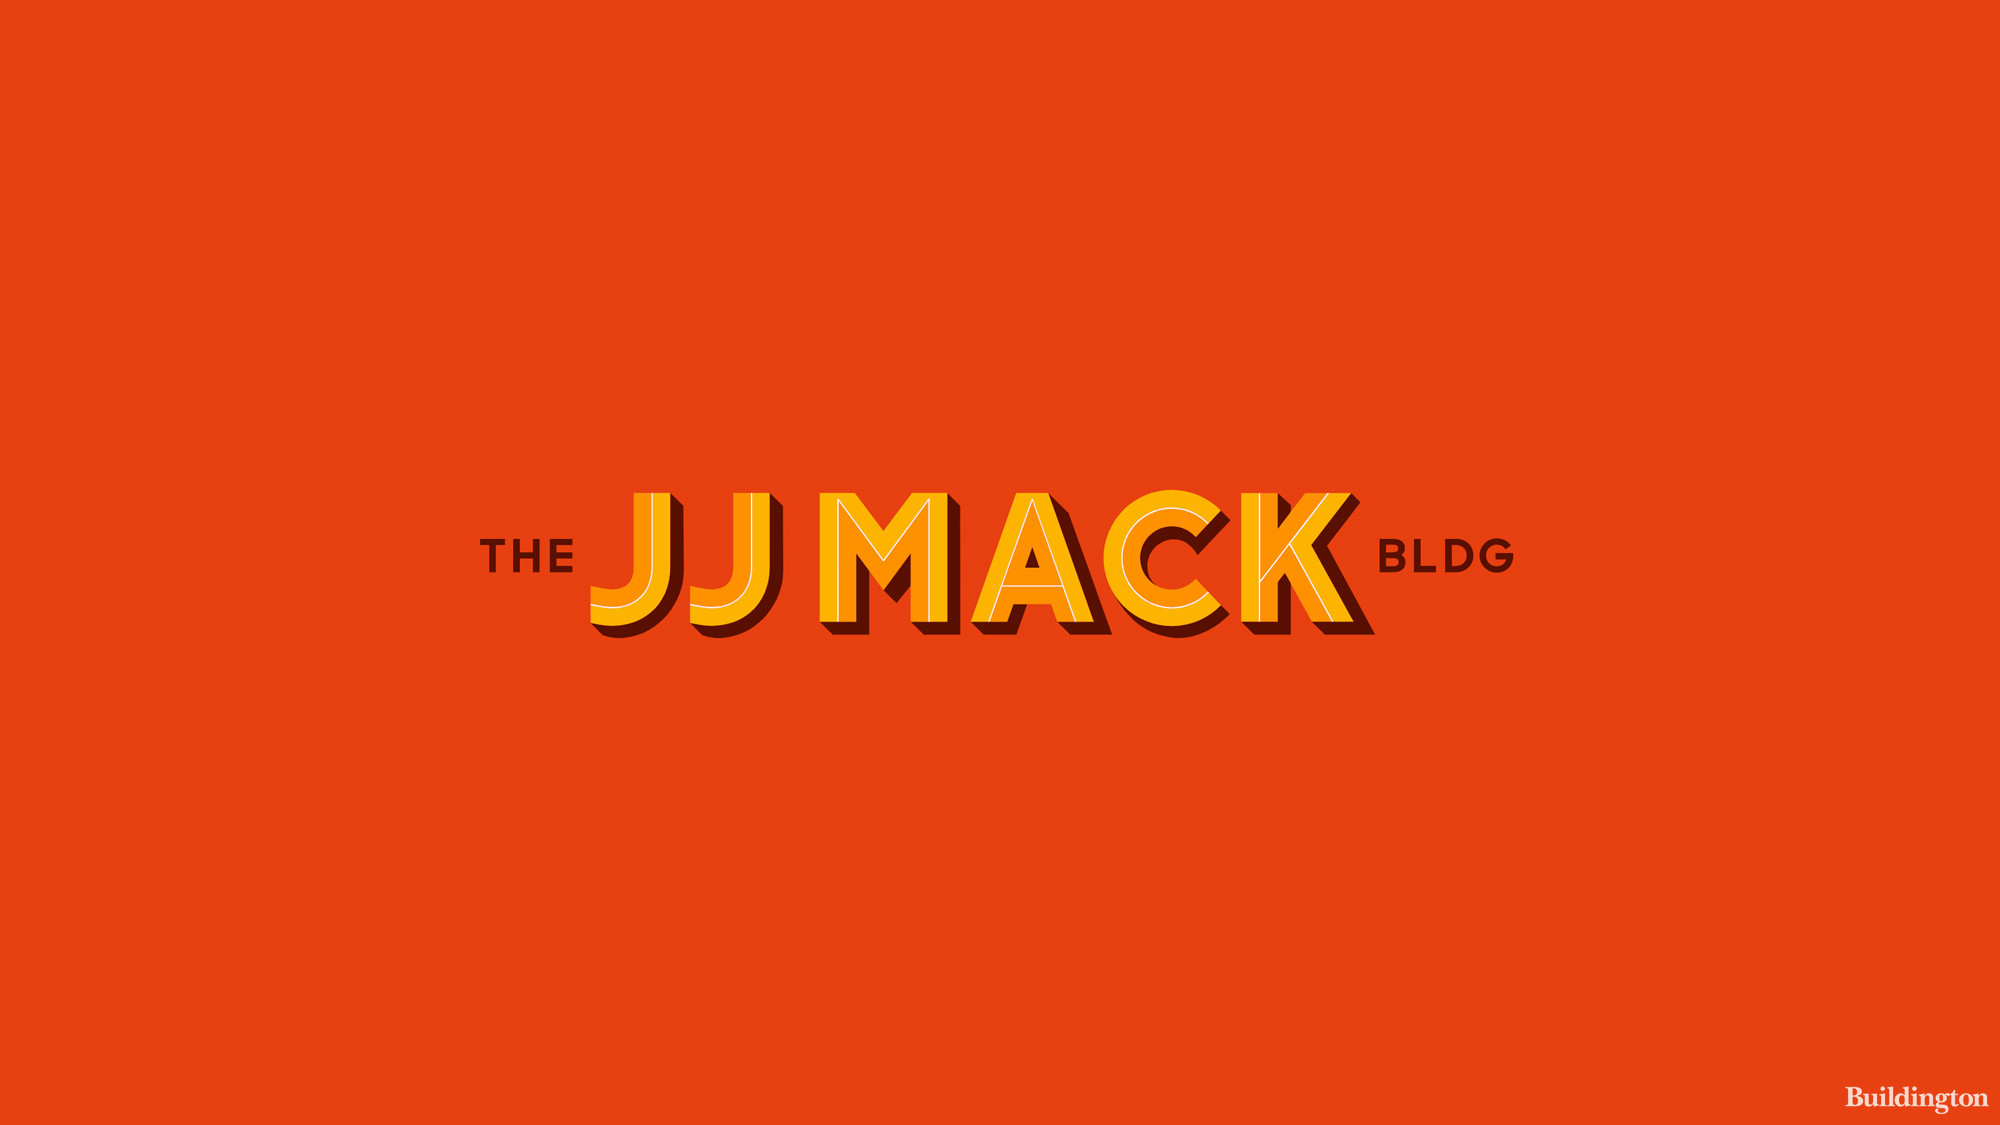 The JJ Mack Building logo